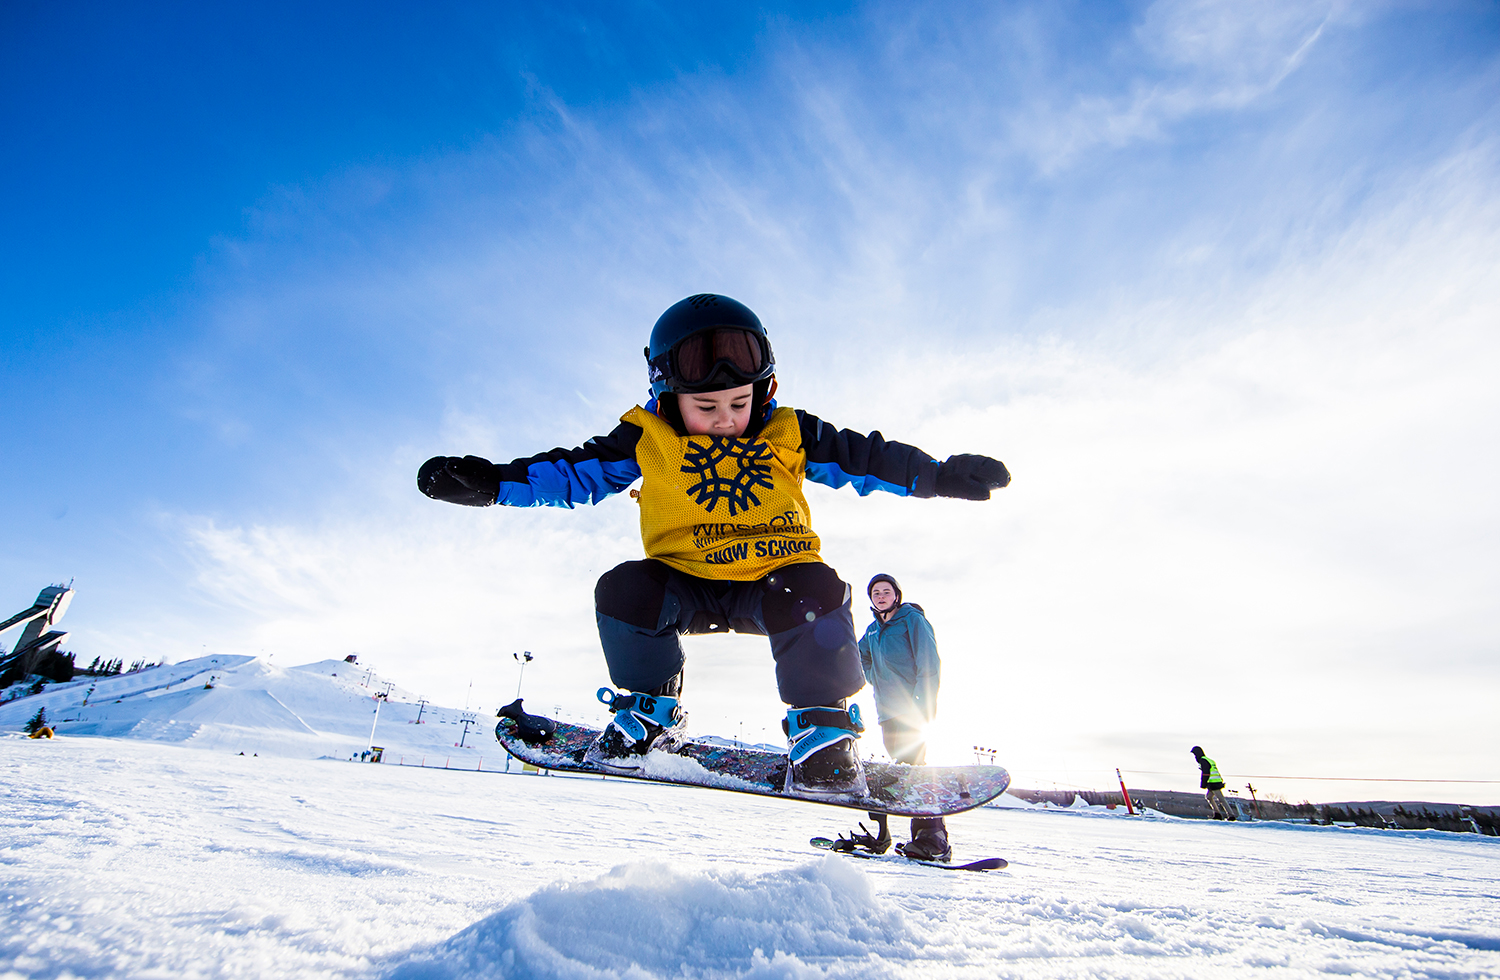 Milieuactivist Spijsverteringsorgaan repetitie Tips for getting your child into snowboarding, from WinSport & Burton